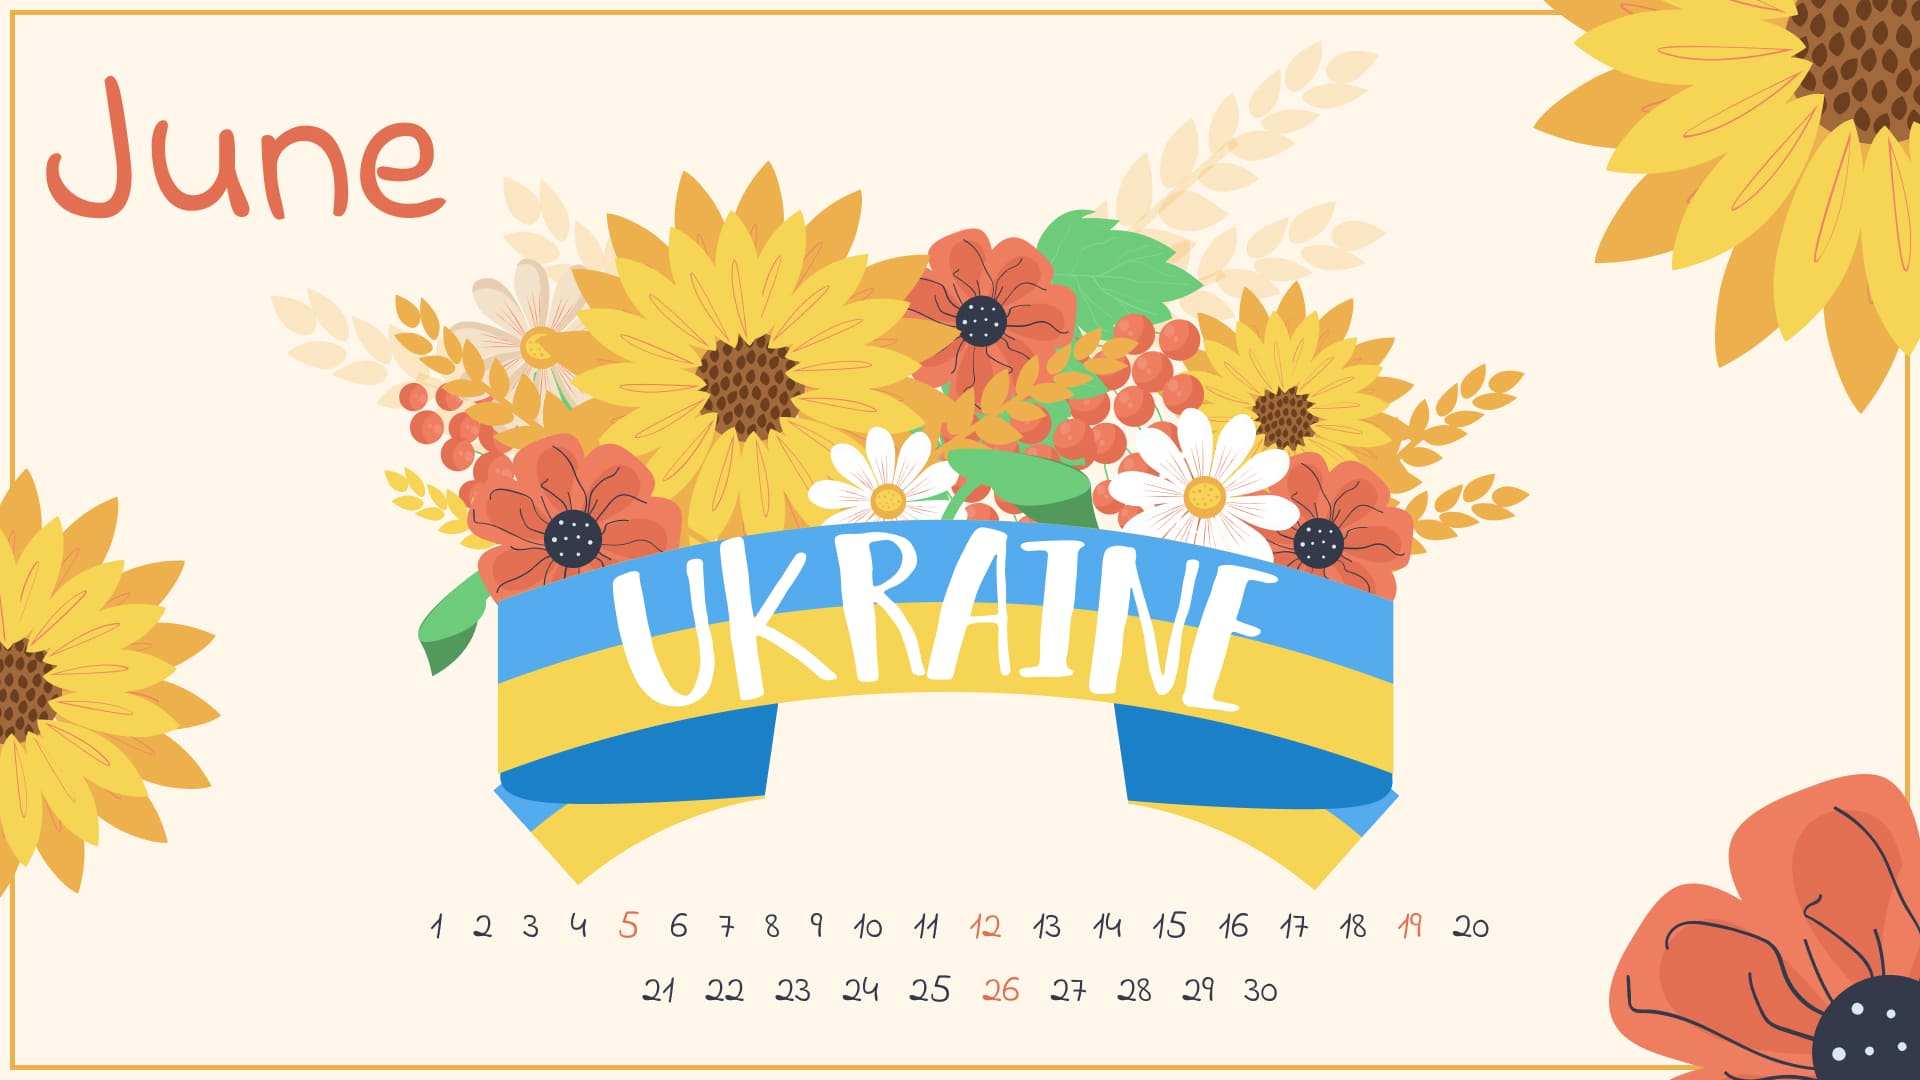 Ukrainian thematic for calendar.